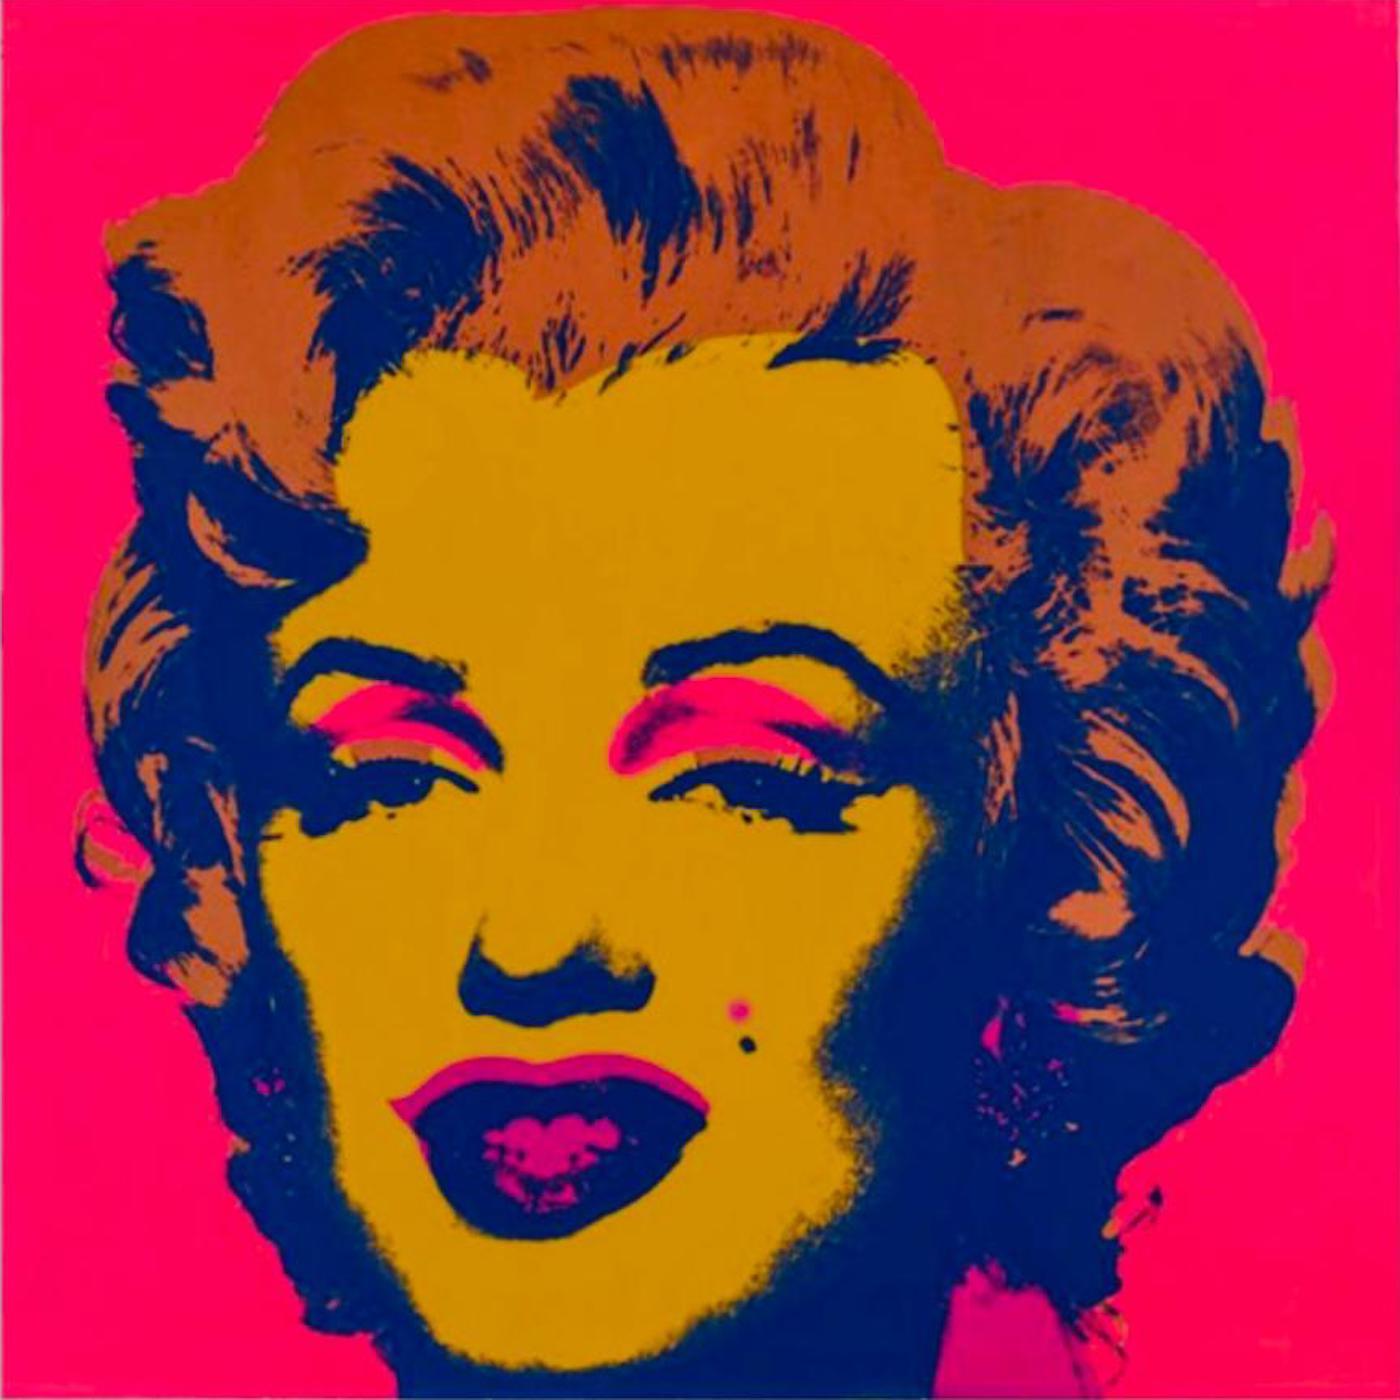 Andy Warhol Portrait Print - Marilyn -  Original Screen Print - 1967